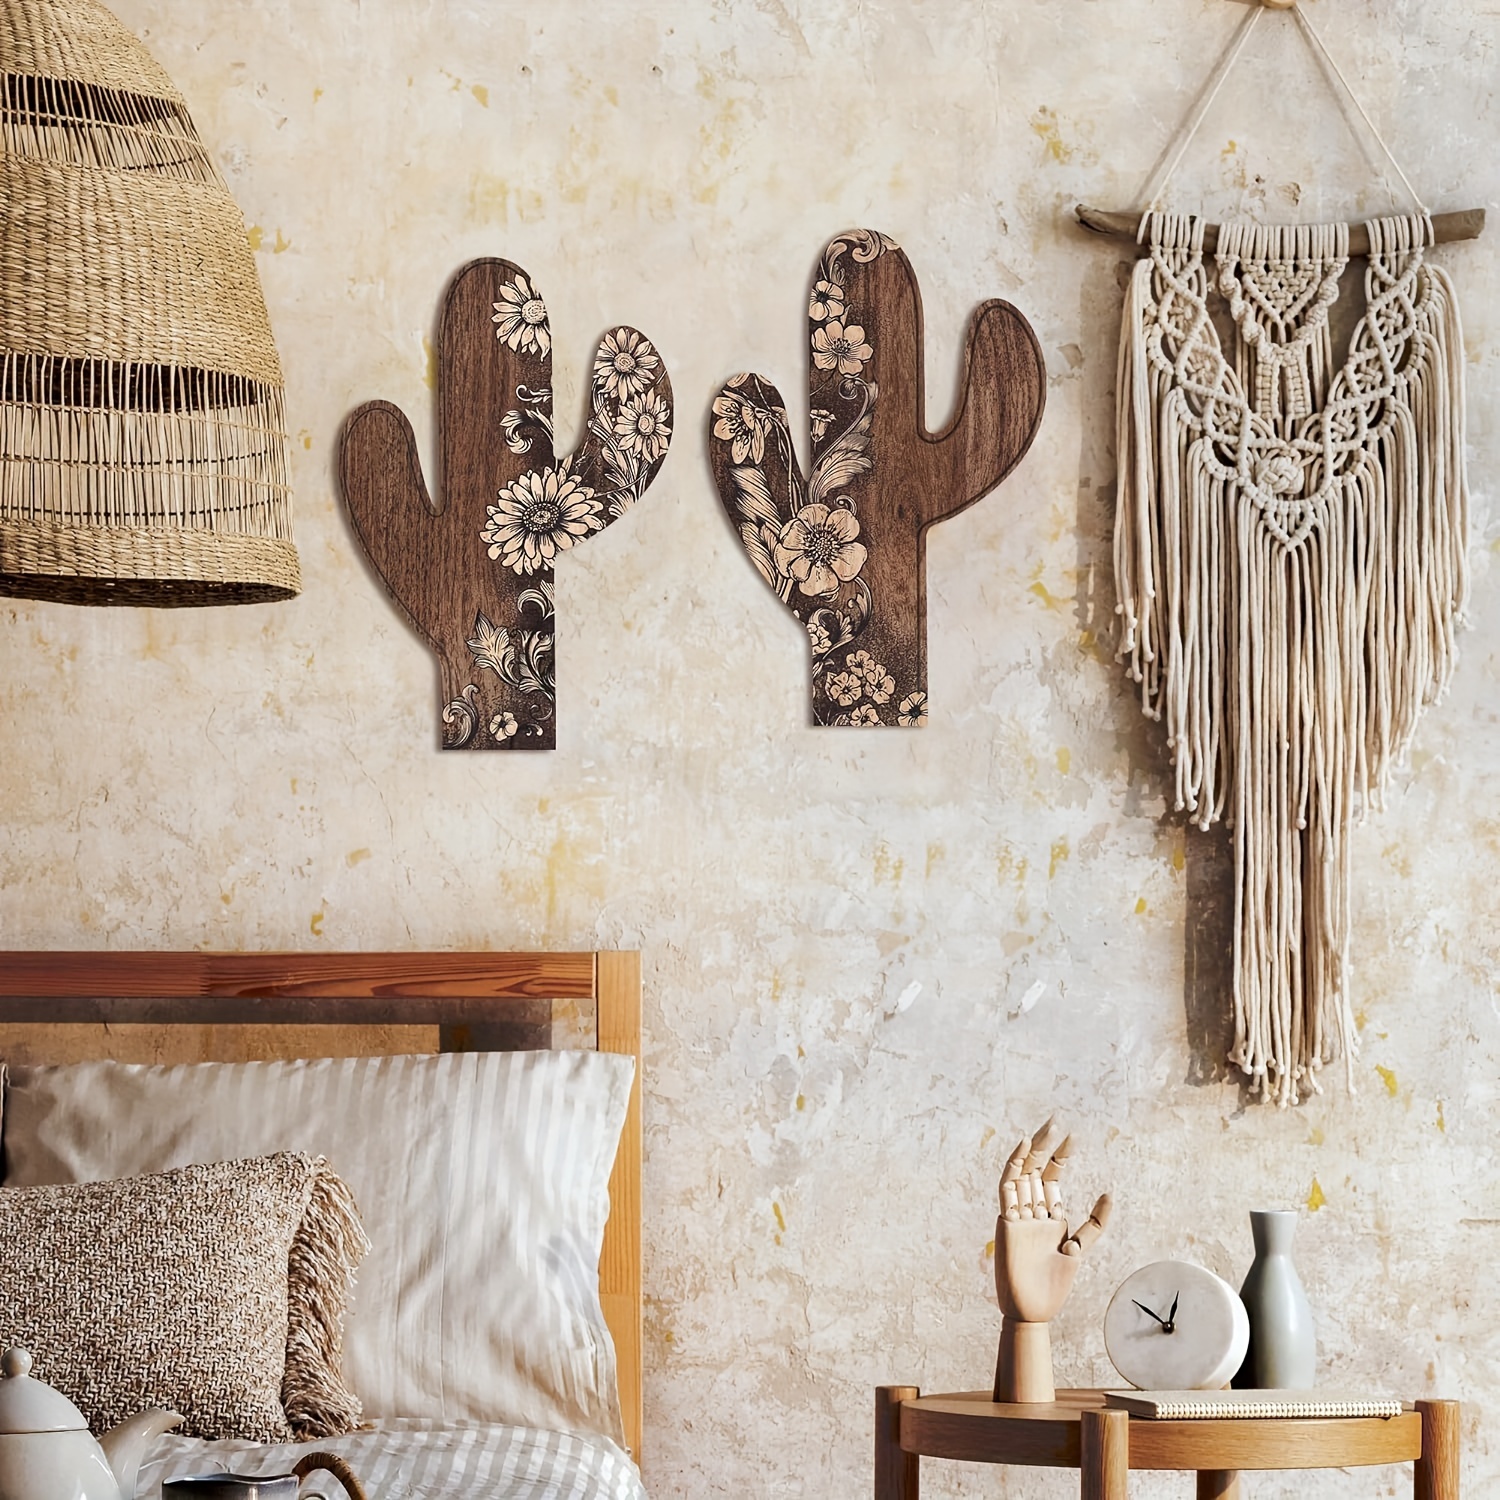 

2pcs Aztec Cactus Decor, Farmhouse Wall Decor, Rustic Flower Patterns Wood Home Decor For Living Room, Bedroom, Bathroom, Western Decor